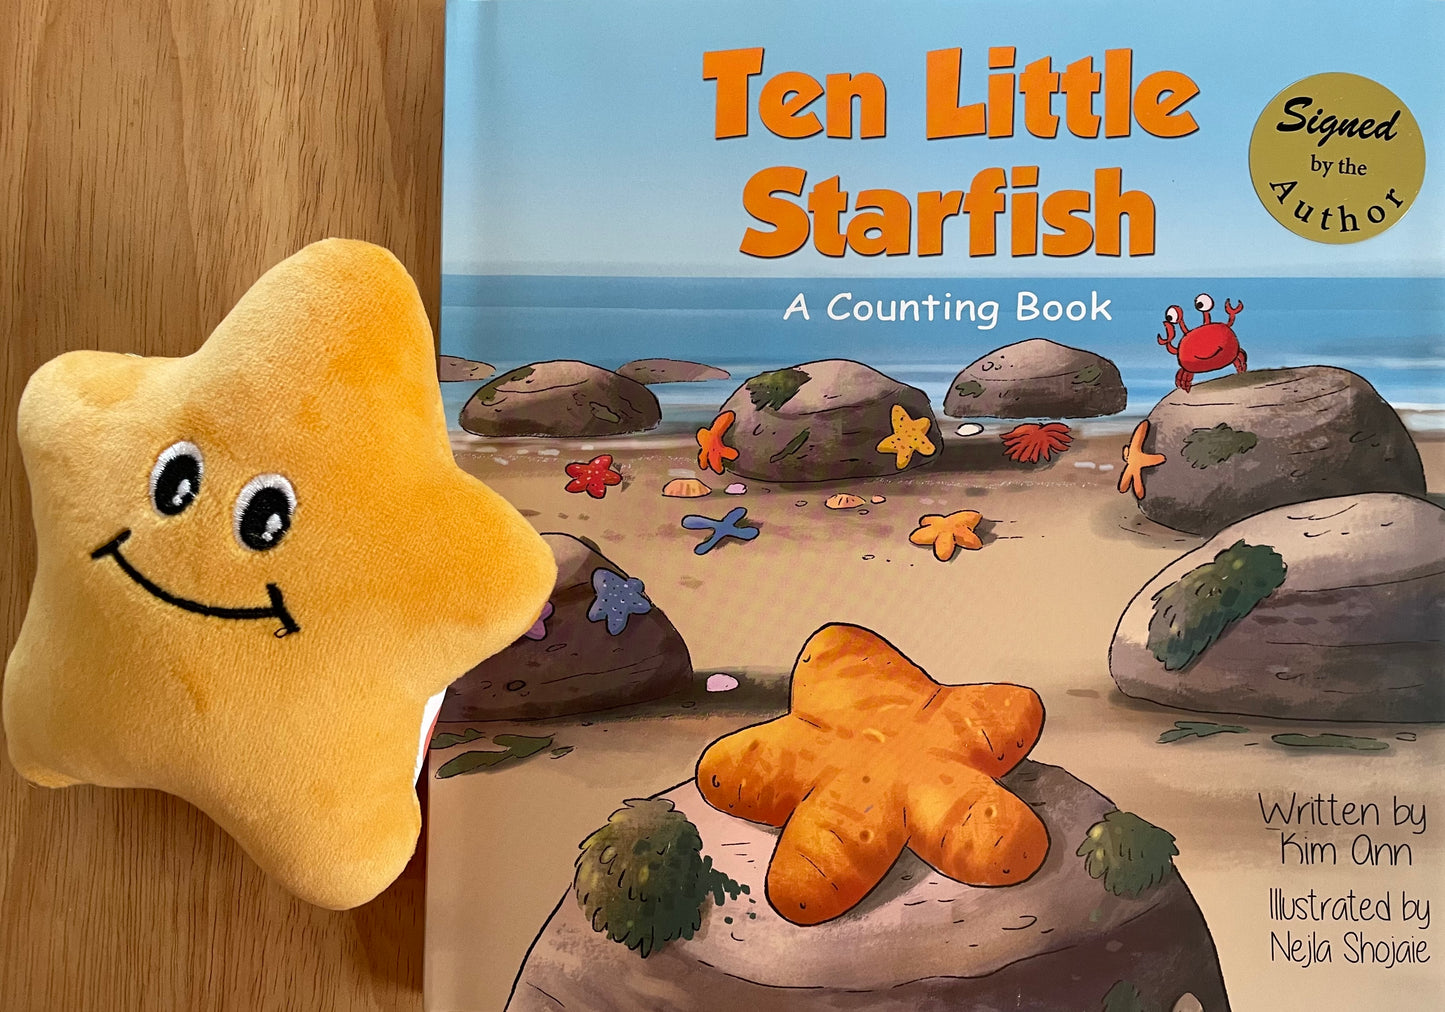 Ten Little Starfish (A Counting Book) and Plush Starfish Stuffed Animal by Kim Ann